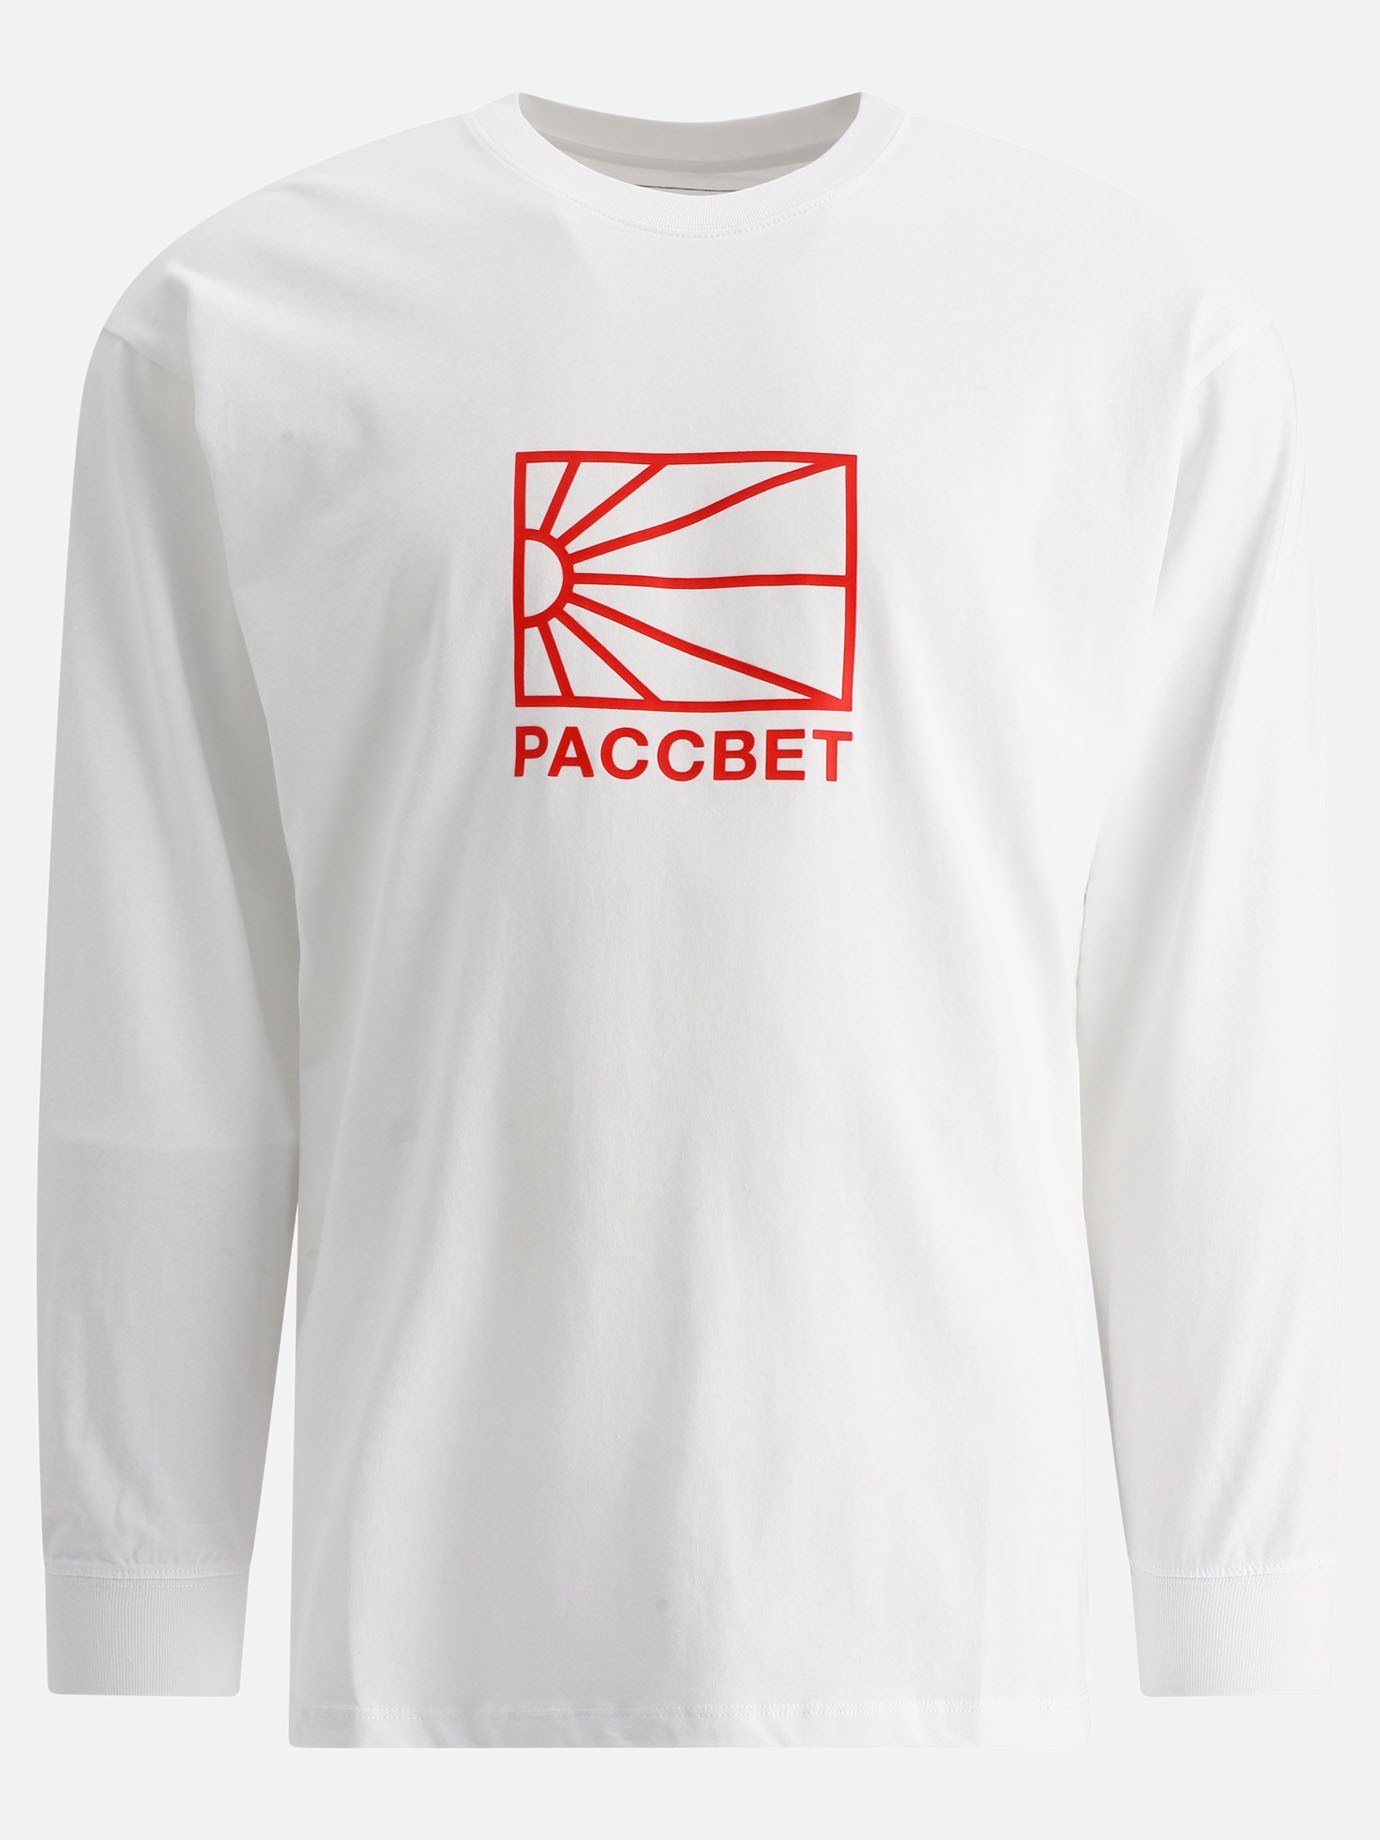  Big Logo  t-shirtby Paccbet - 0